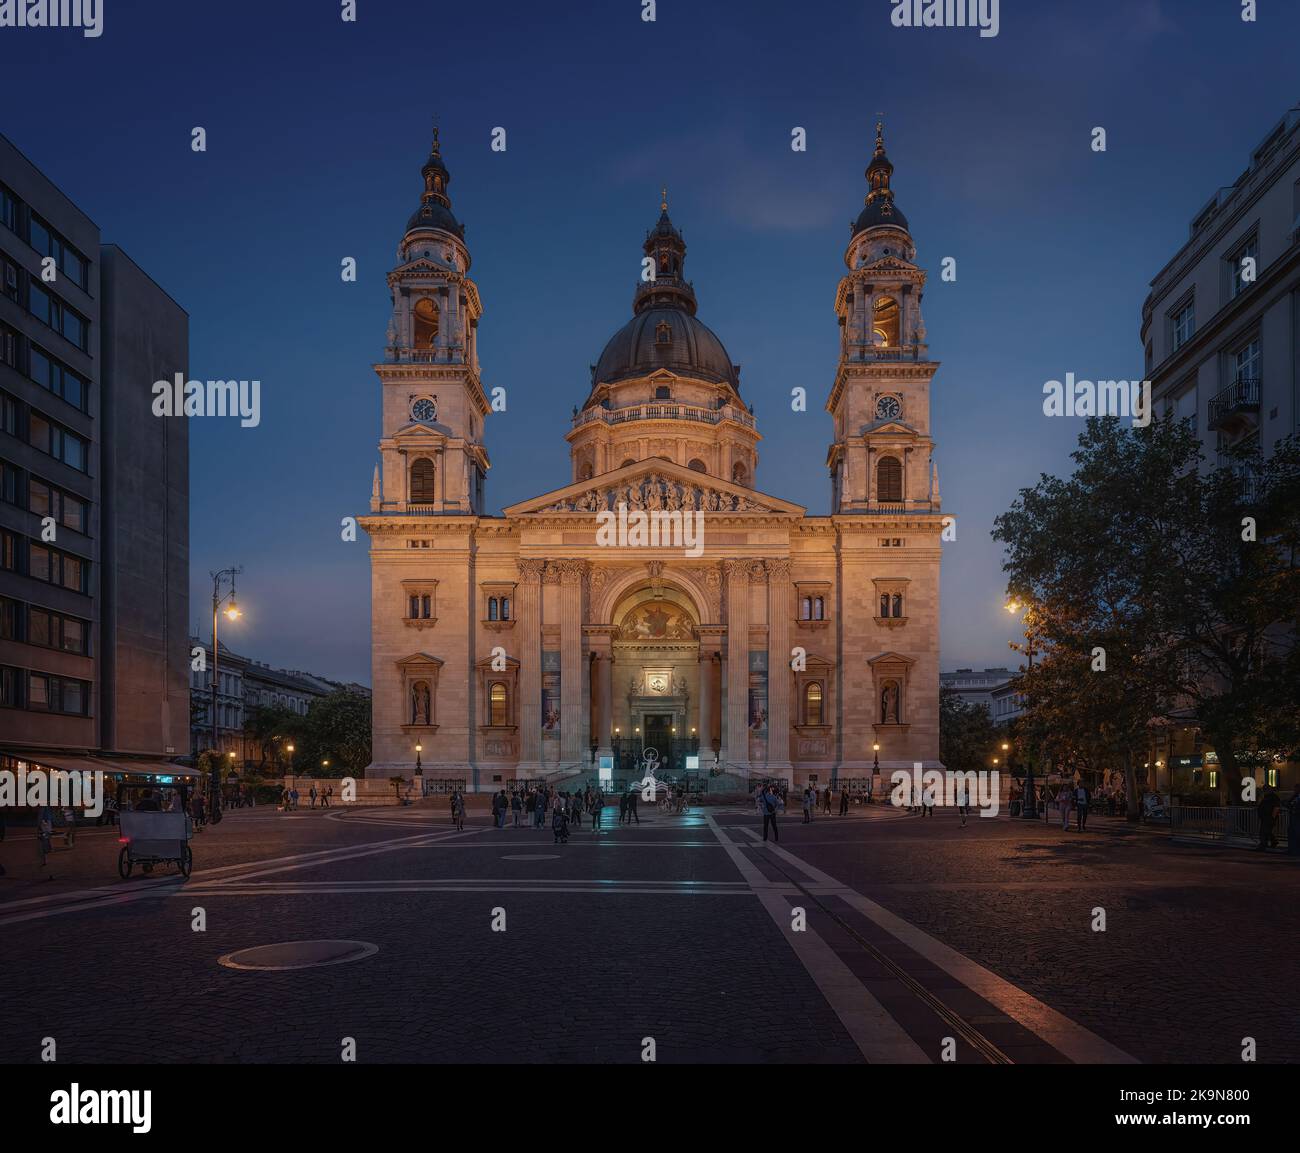 Budapest, Hungary - Oct 20, 2019: St. Stephen's Basilica at night - Budapest, Hungary Stock Photo